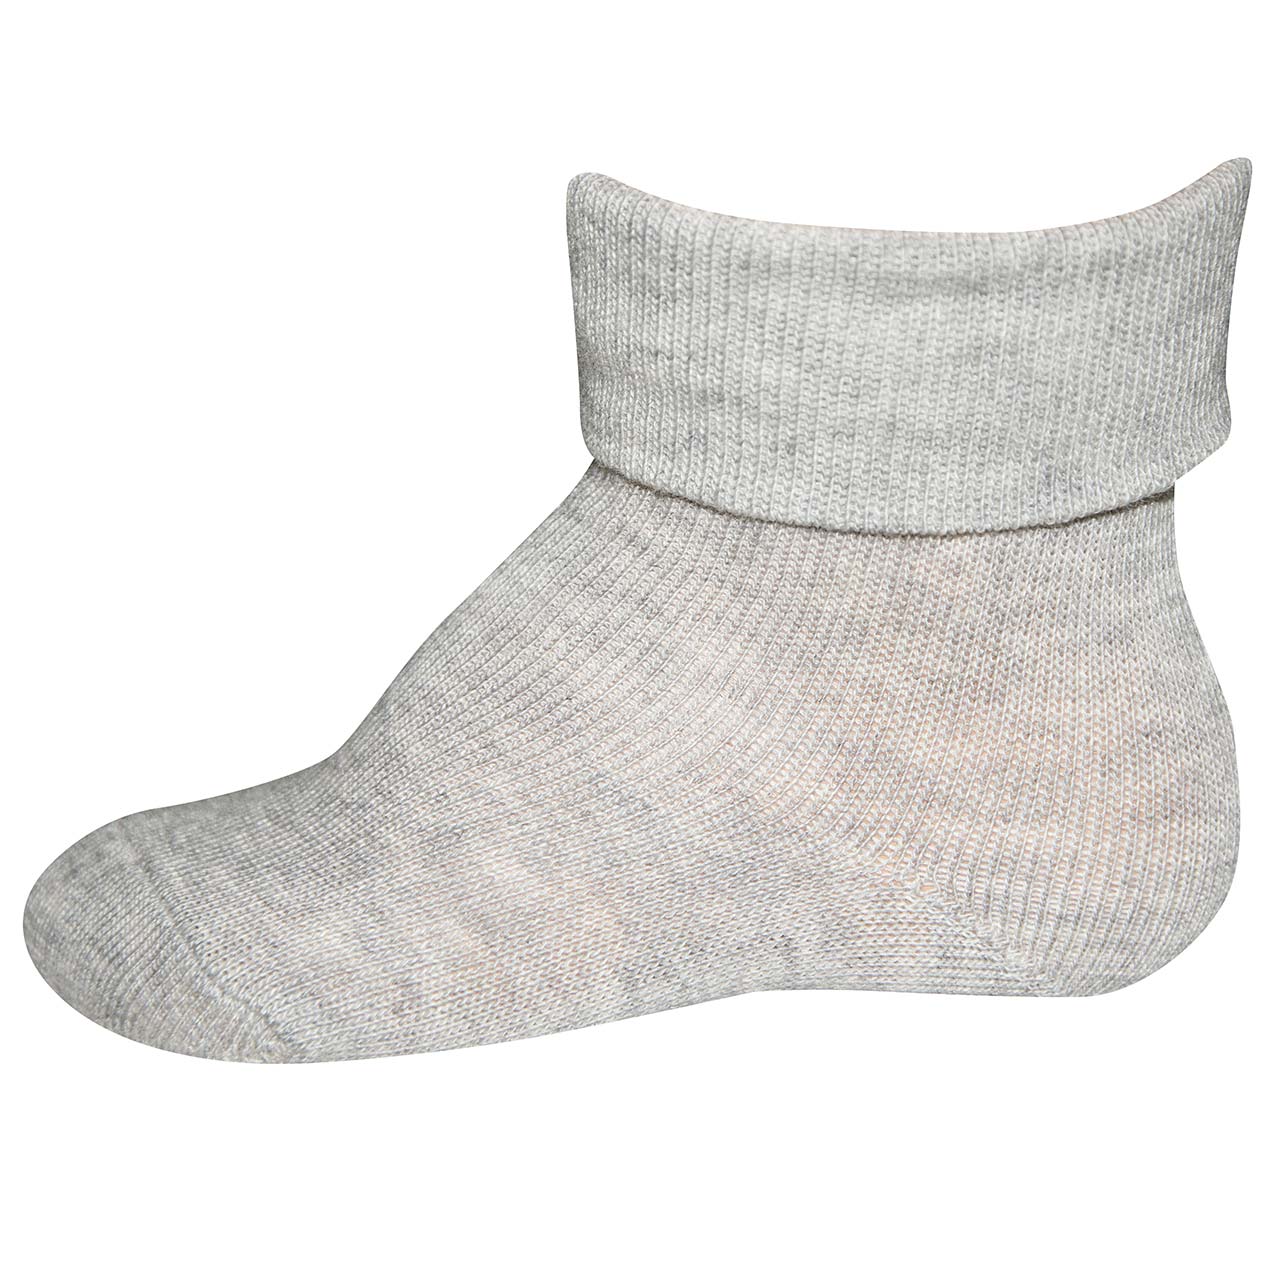 Baby Socken 2er Pack grau-weiß